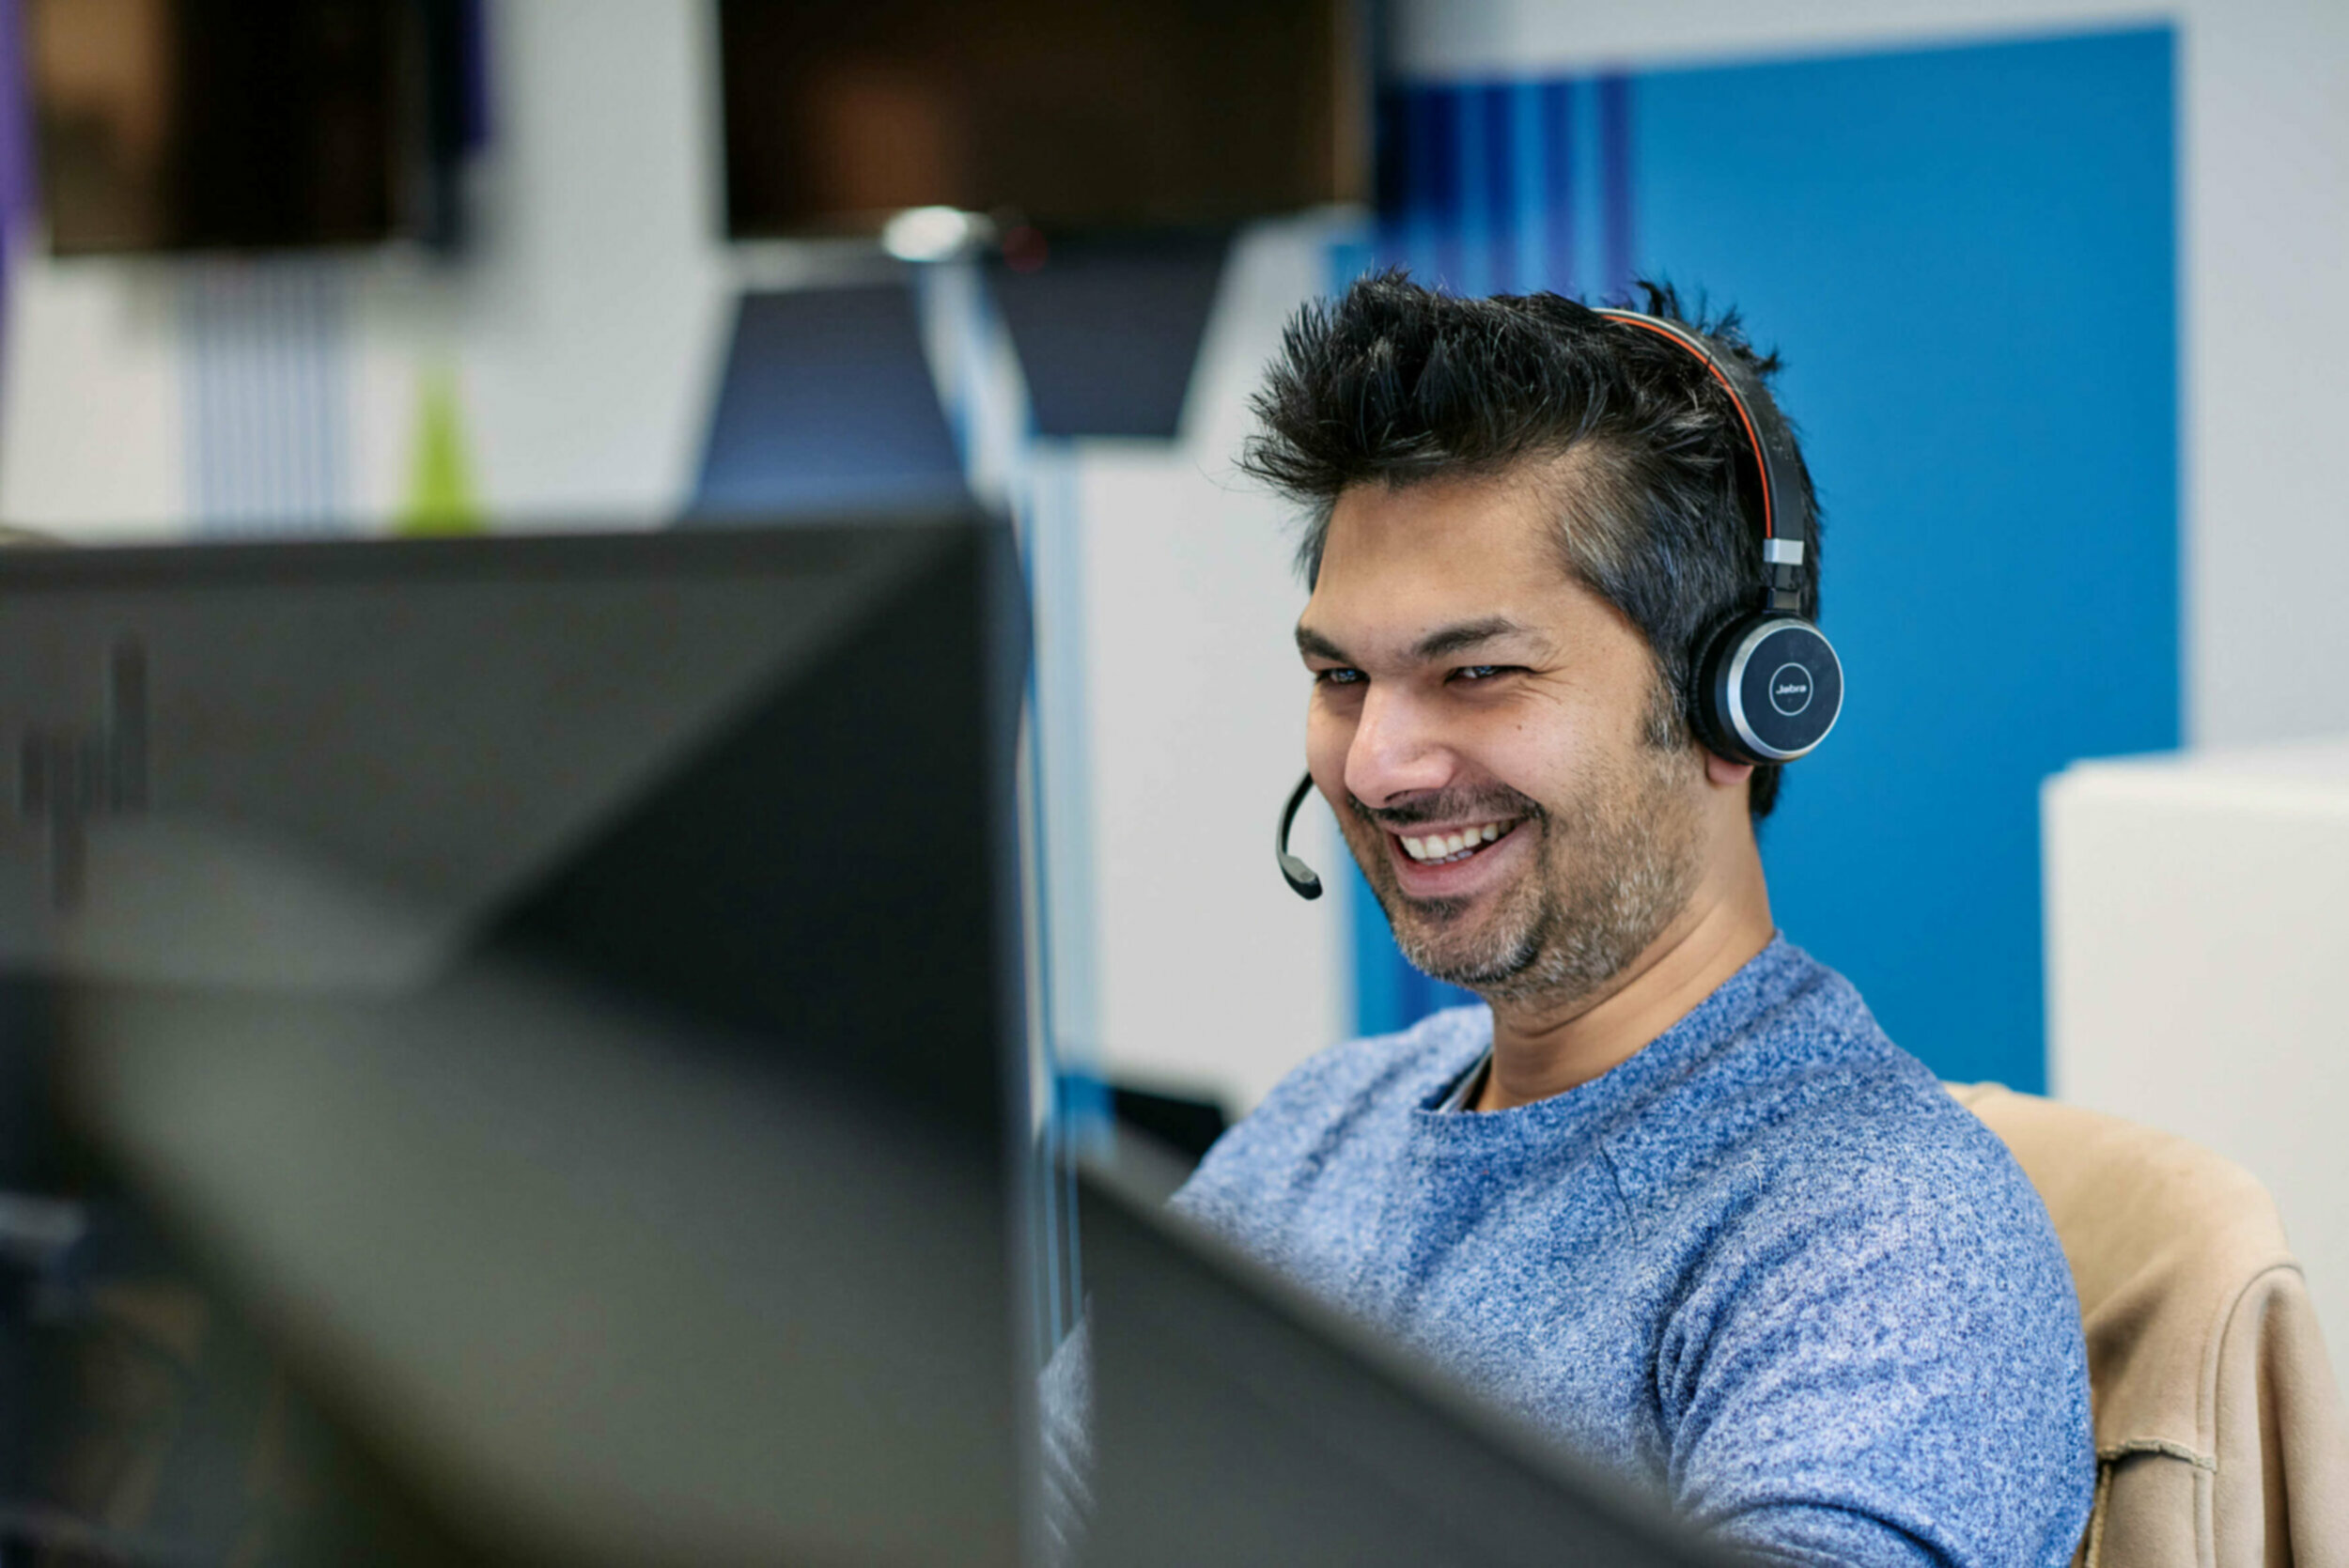 Man smiling at his computer wearing headphones.